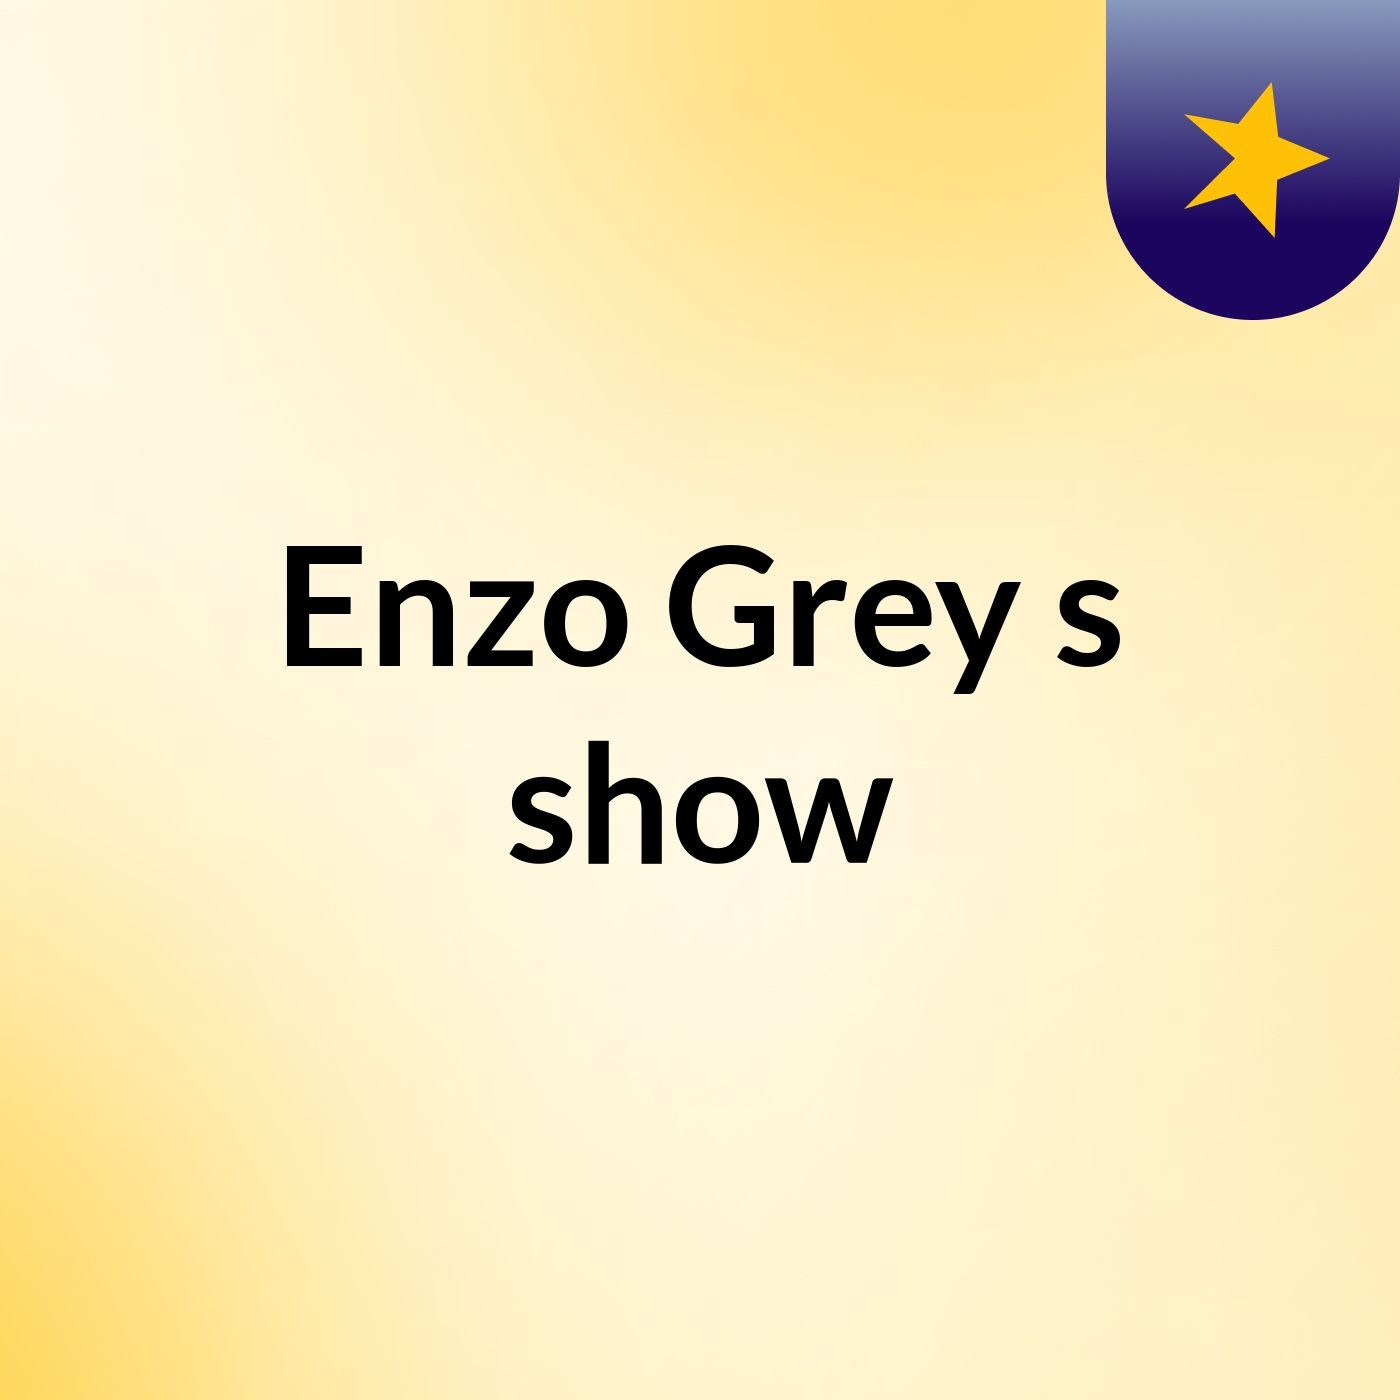 Enzo Grey's show